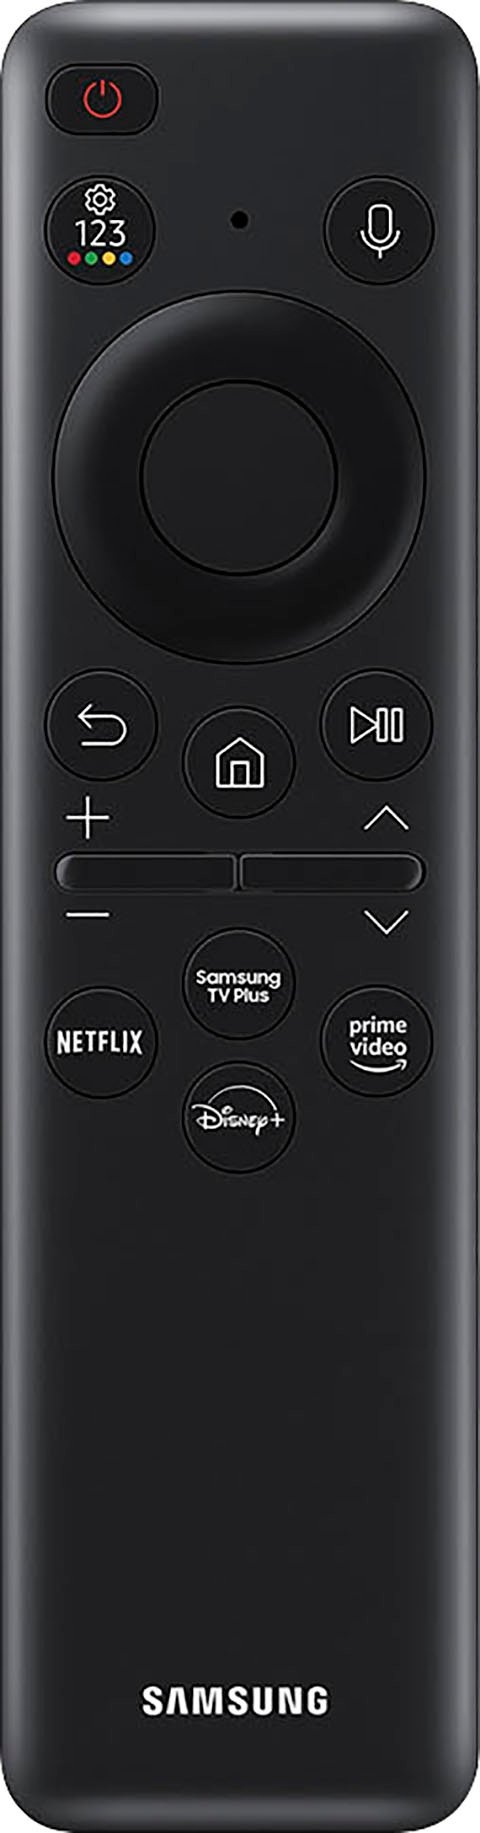 Led-TV Quantum Gaming Samsung nu kopen OTTO cm Neural online Smart 65 TV, \